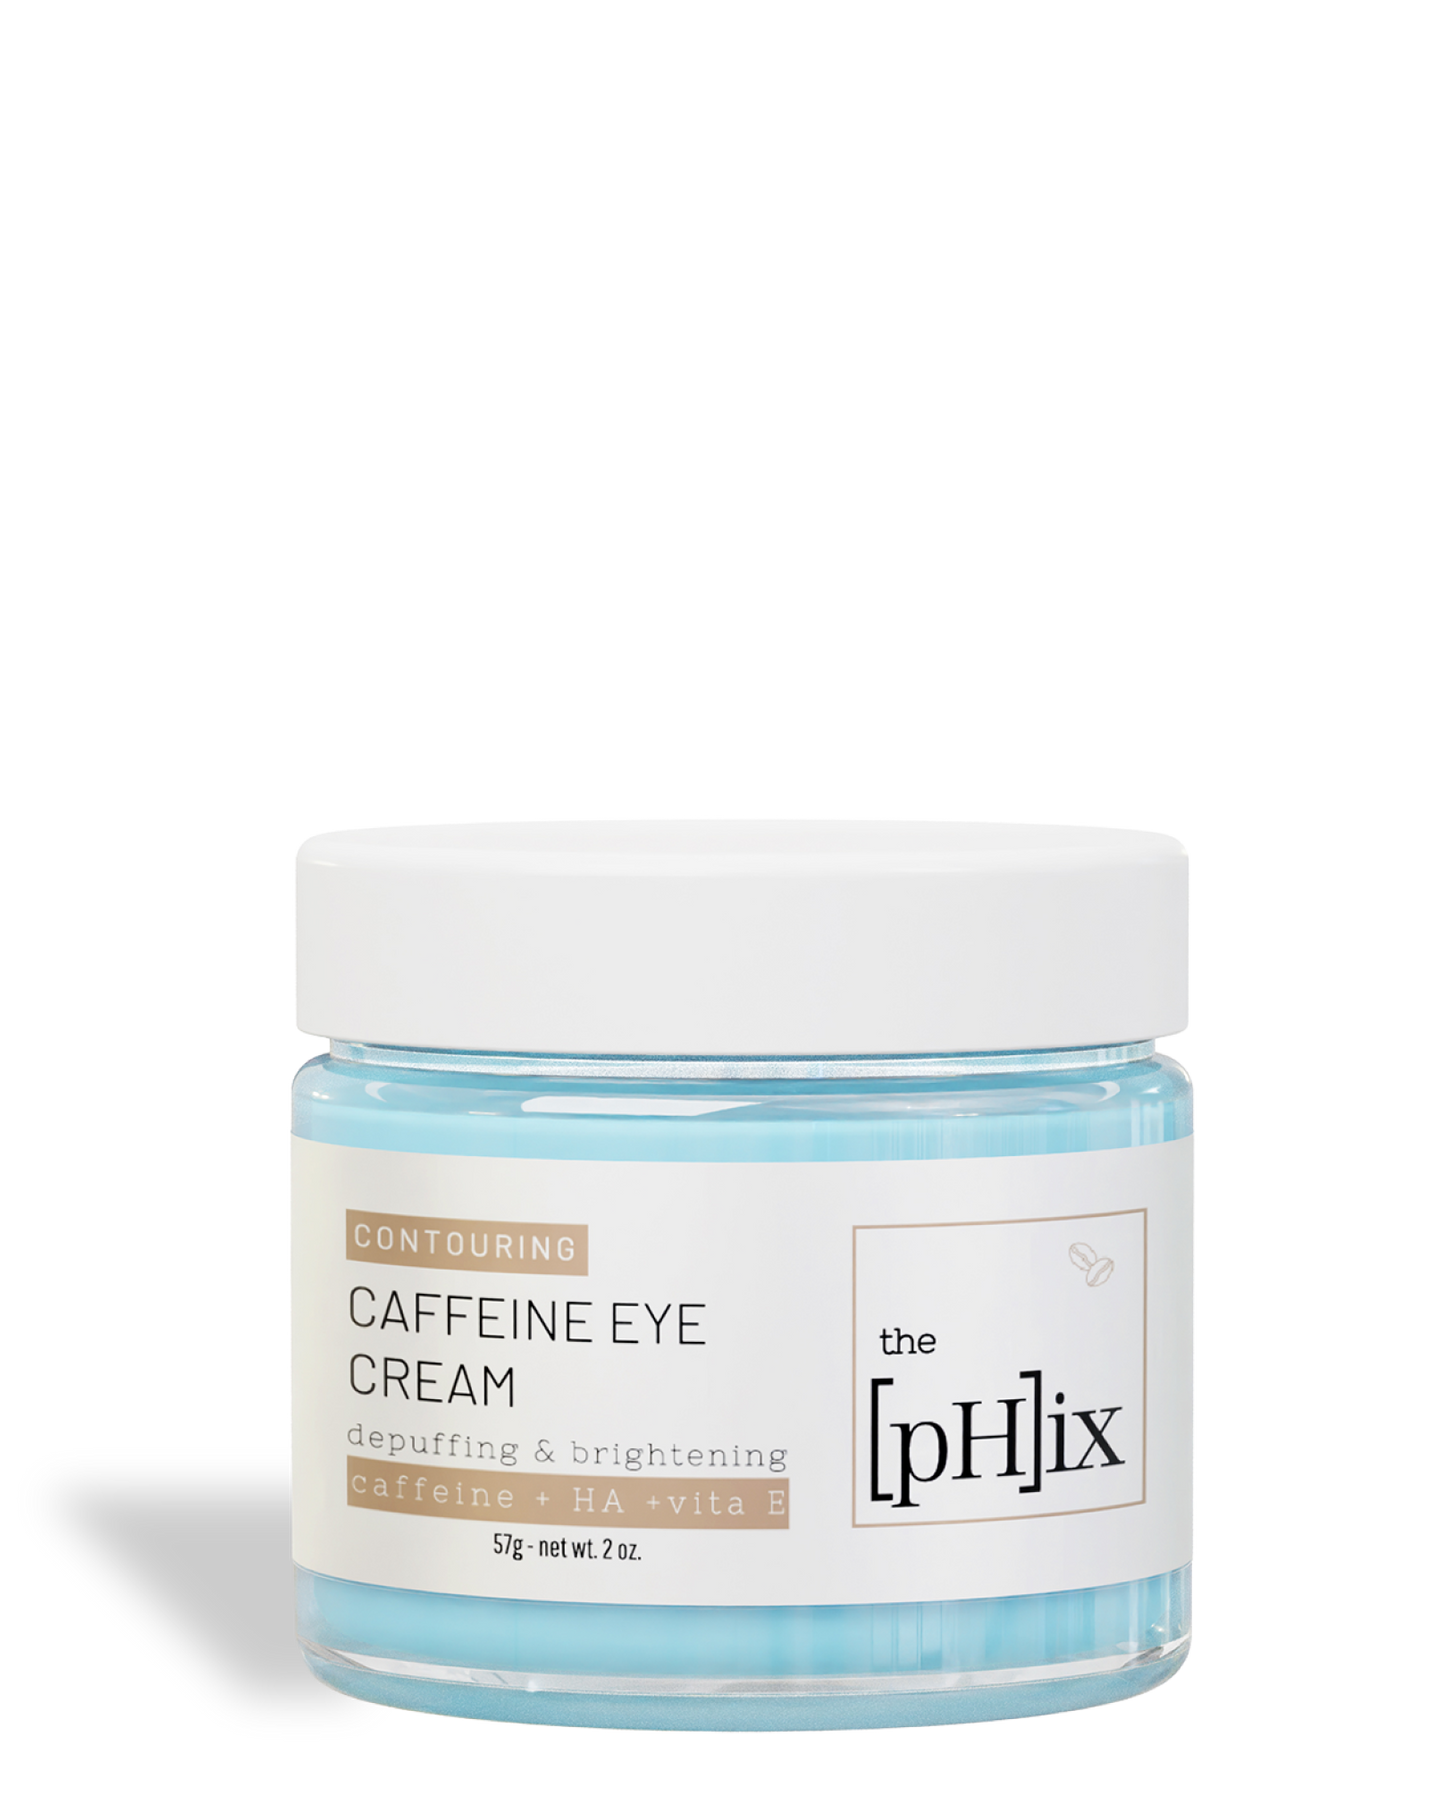 Caffeine Eye Cream for Dark Circles & Puffiness